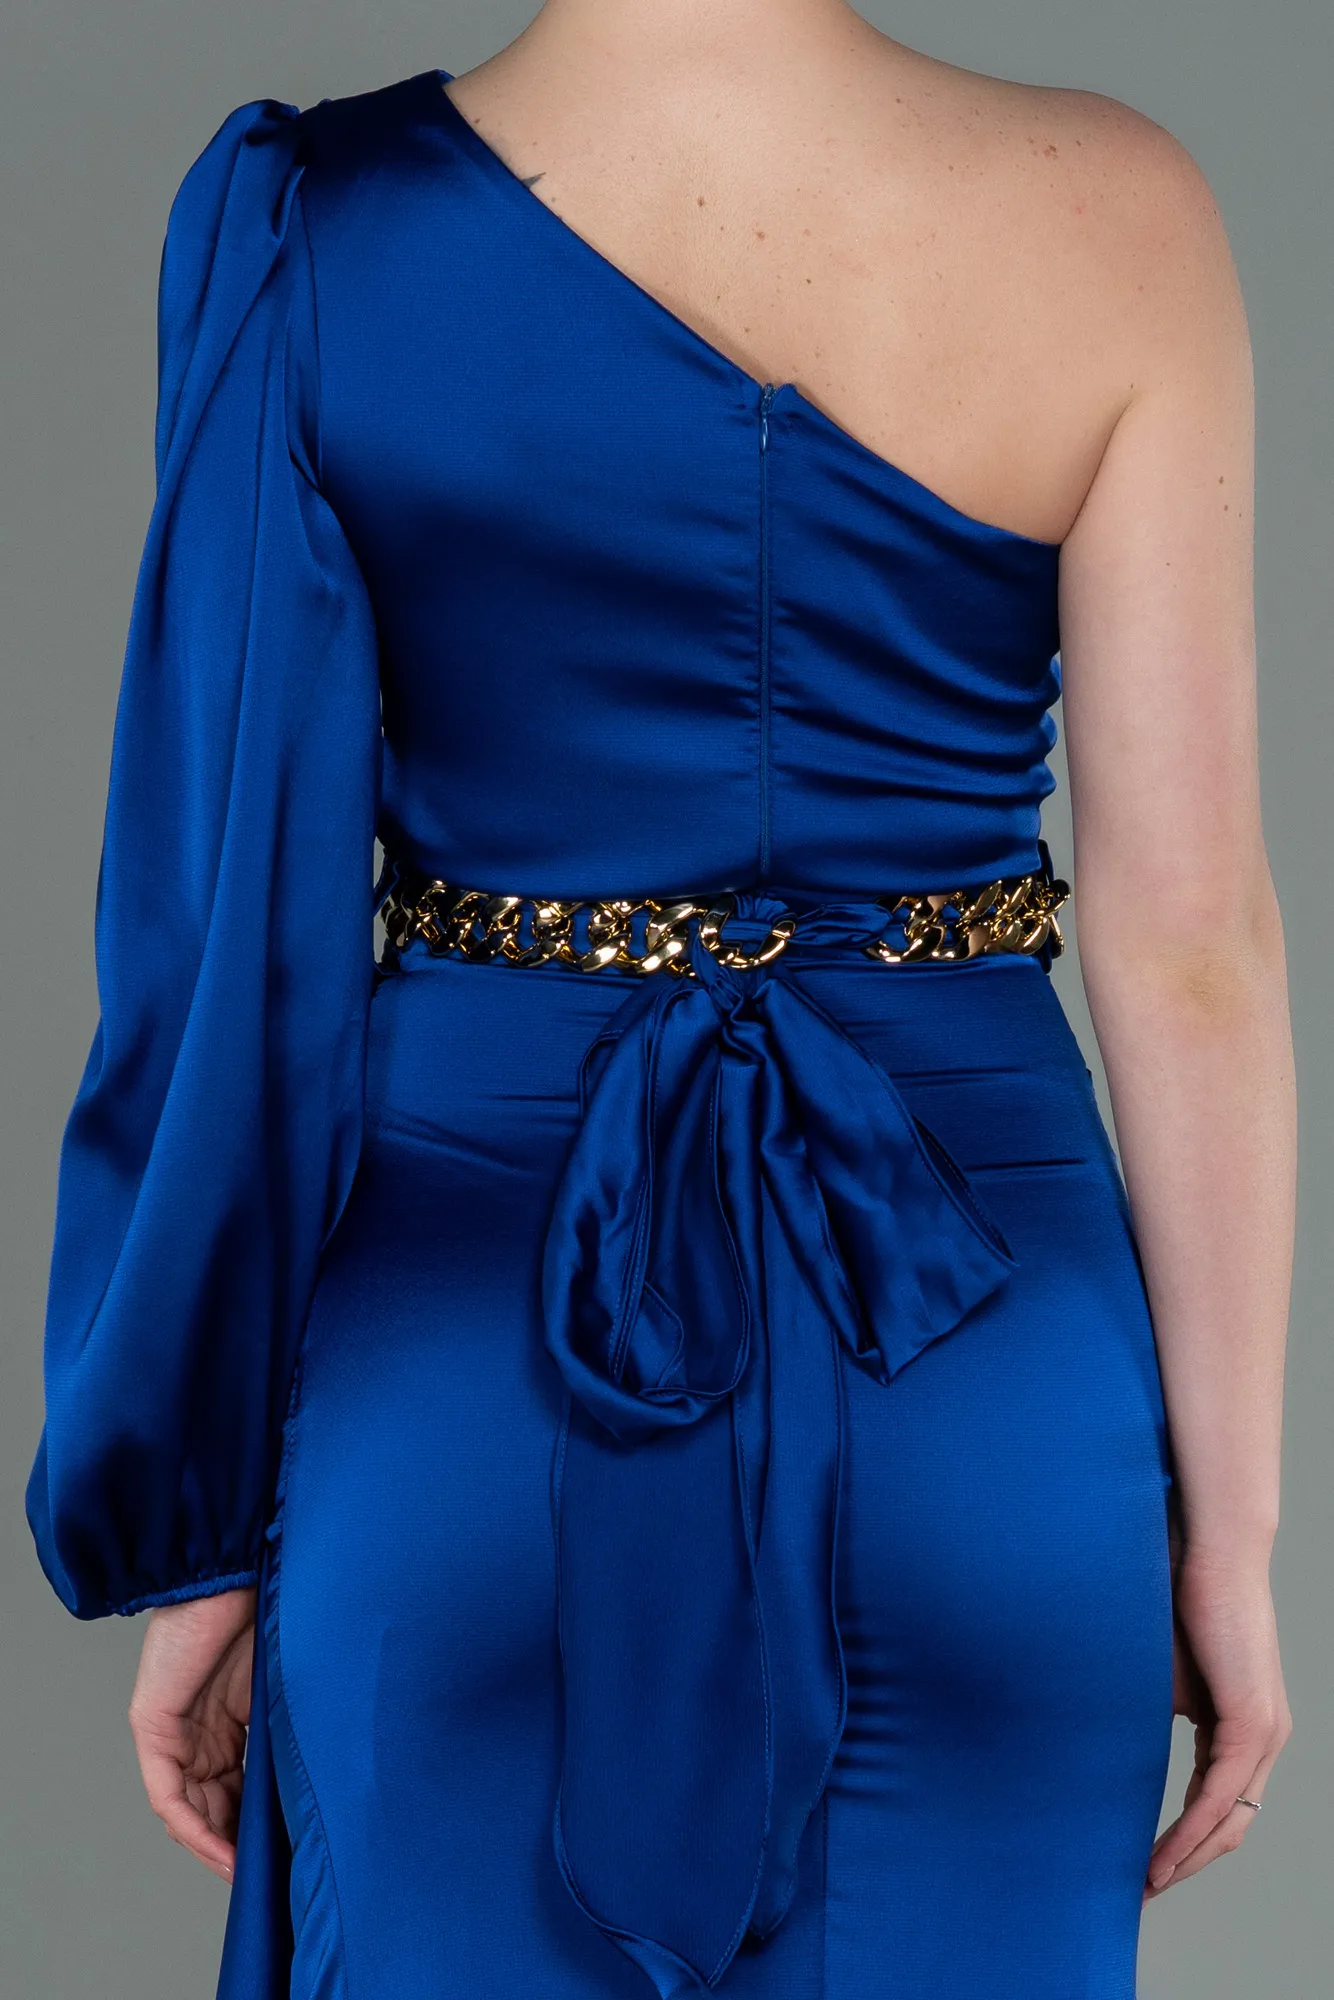 Sax Blue-Long Satin Prom Gown ABU2625